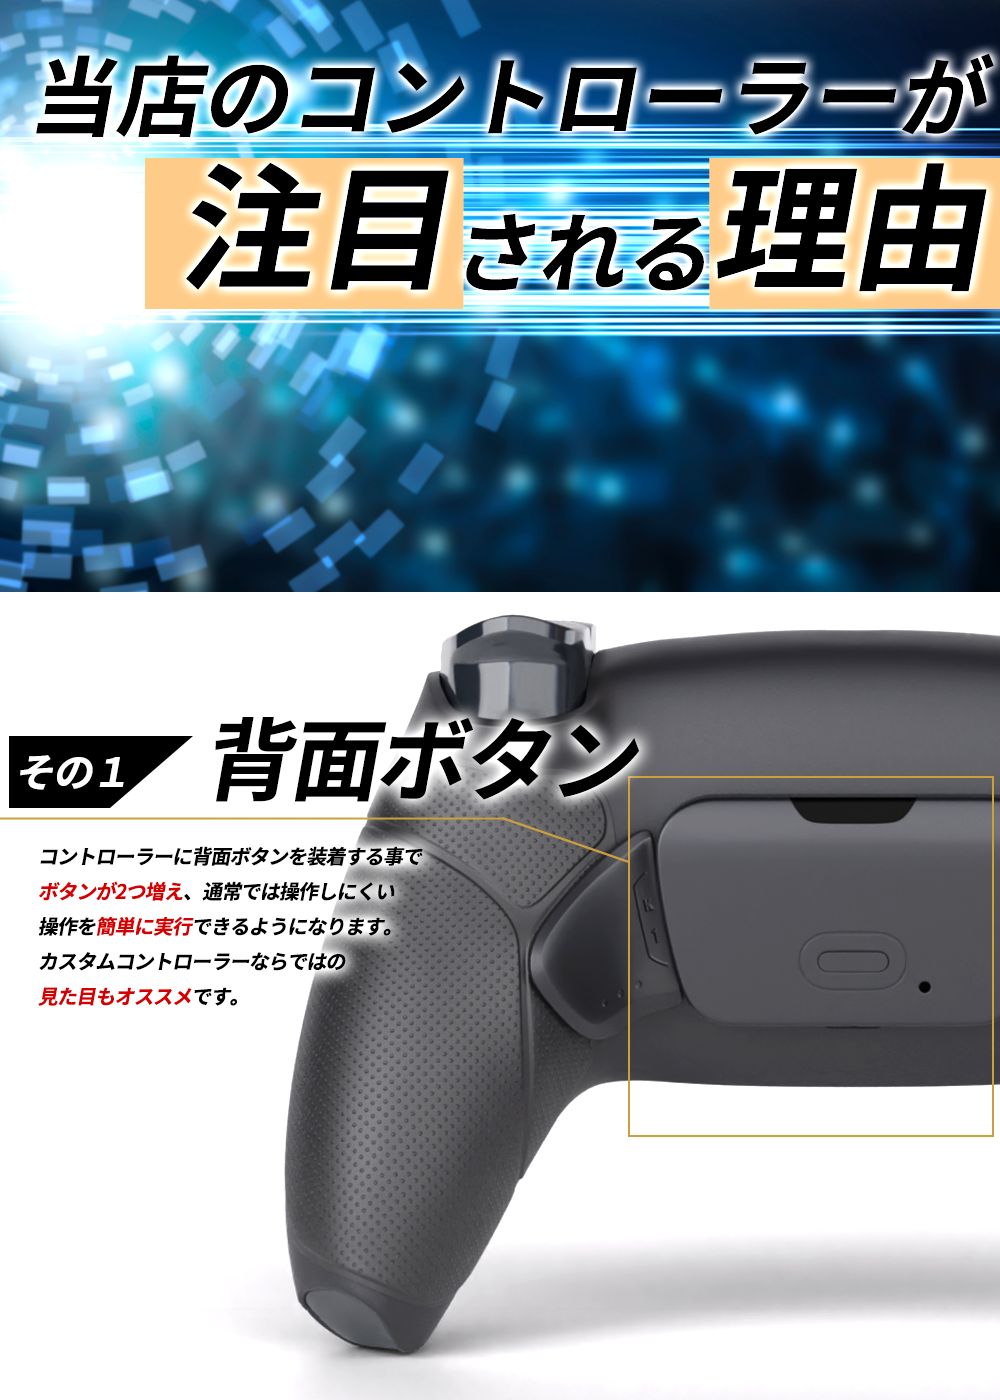 PS5コントローラー DualSense 背面パドル2つ MERKA.G - メルカリ